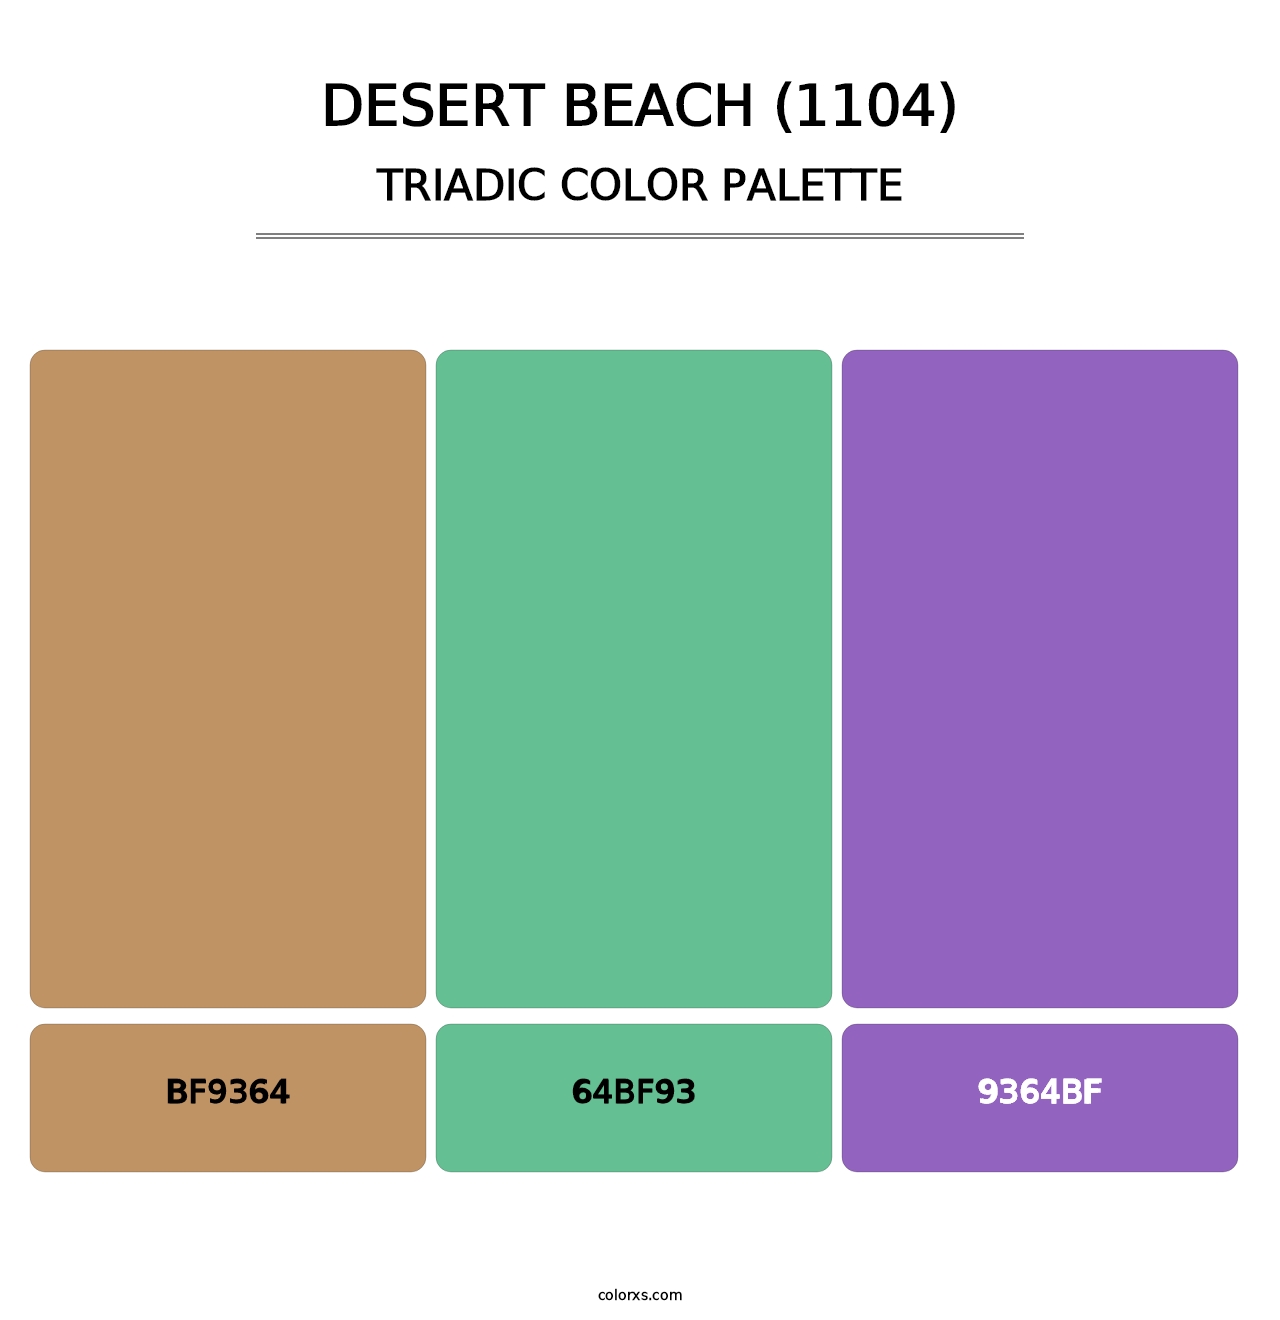 Desert Beach (1104) - Triadic Color Palette